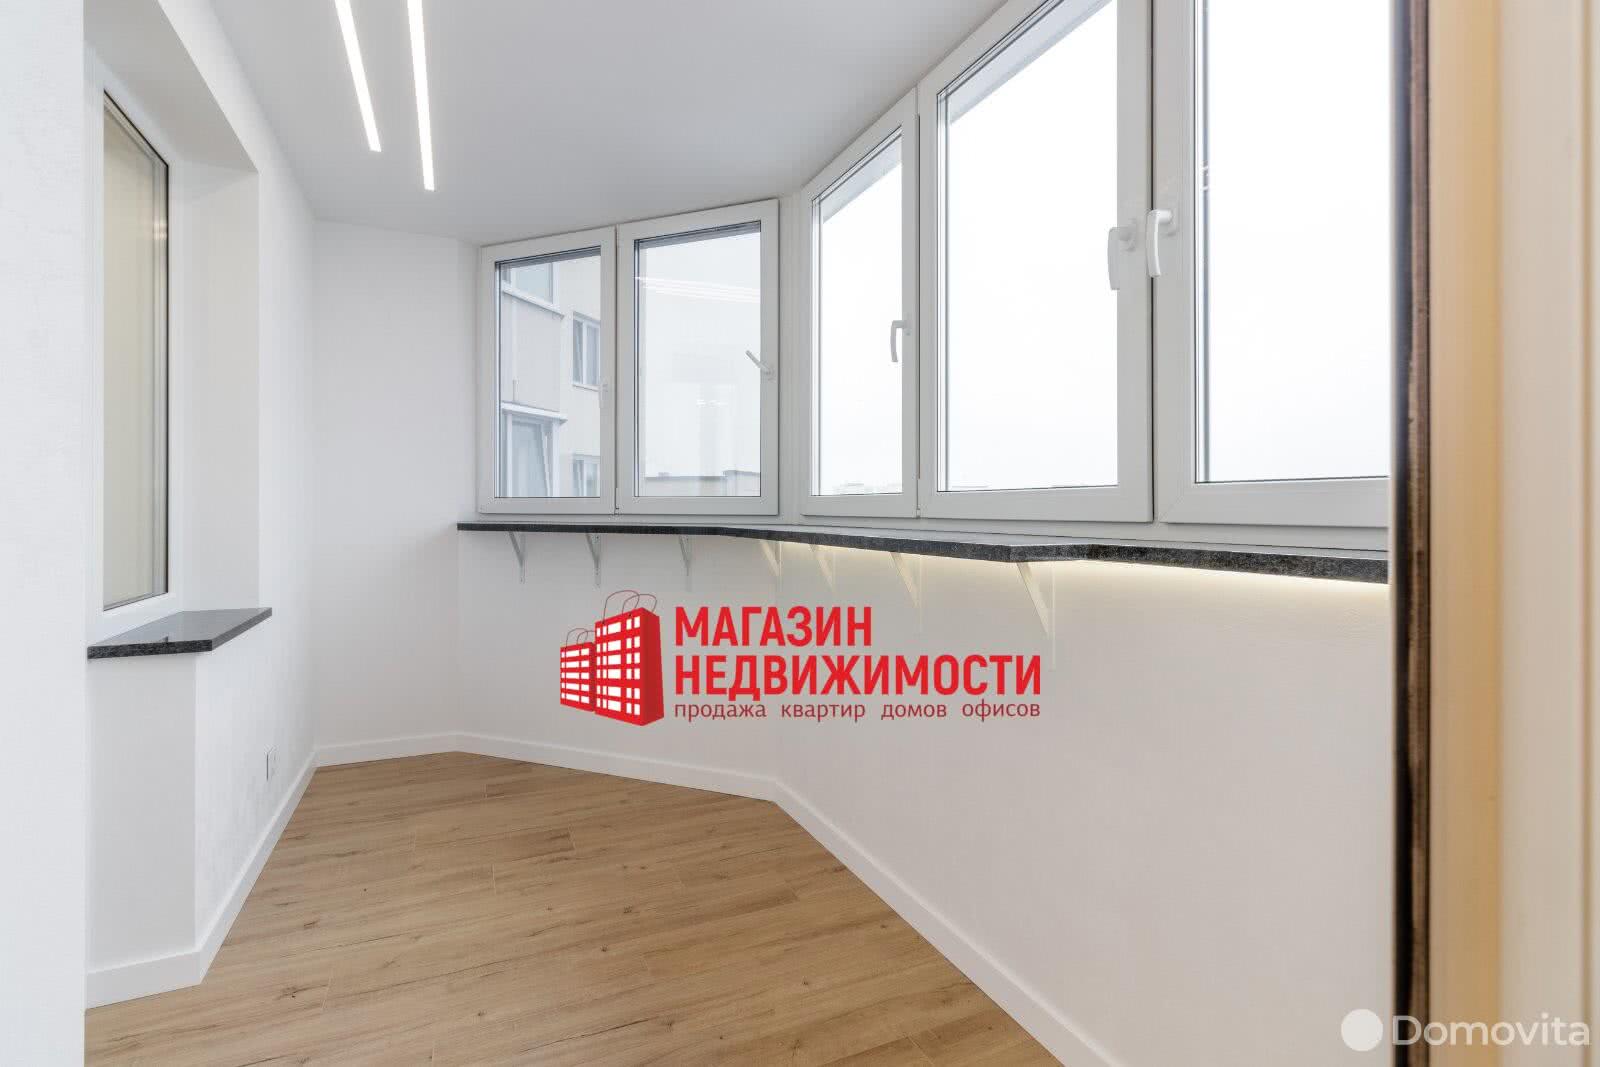 квартира, Гродно, пр-т Клецкова, д. 21А, стоимость продажи 325 450 р.